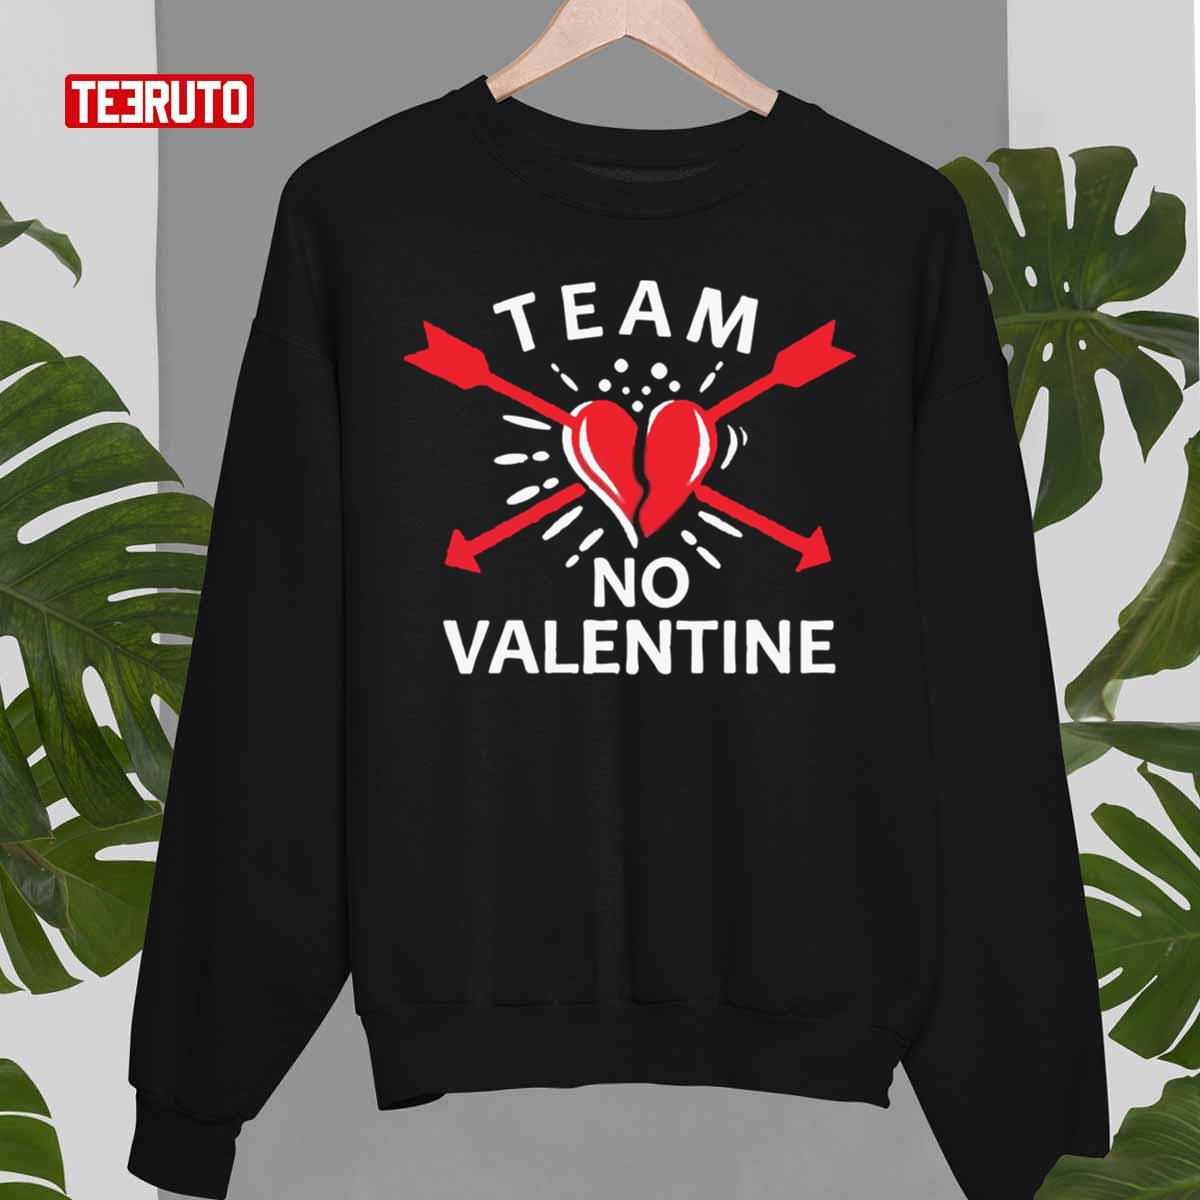 Team No Valentine Funny Anti Valentine's Day Unisex T-Shirt